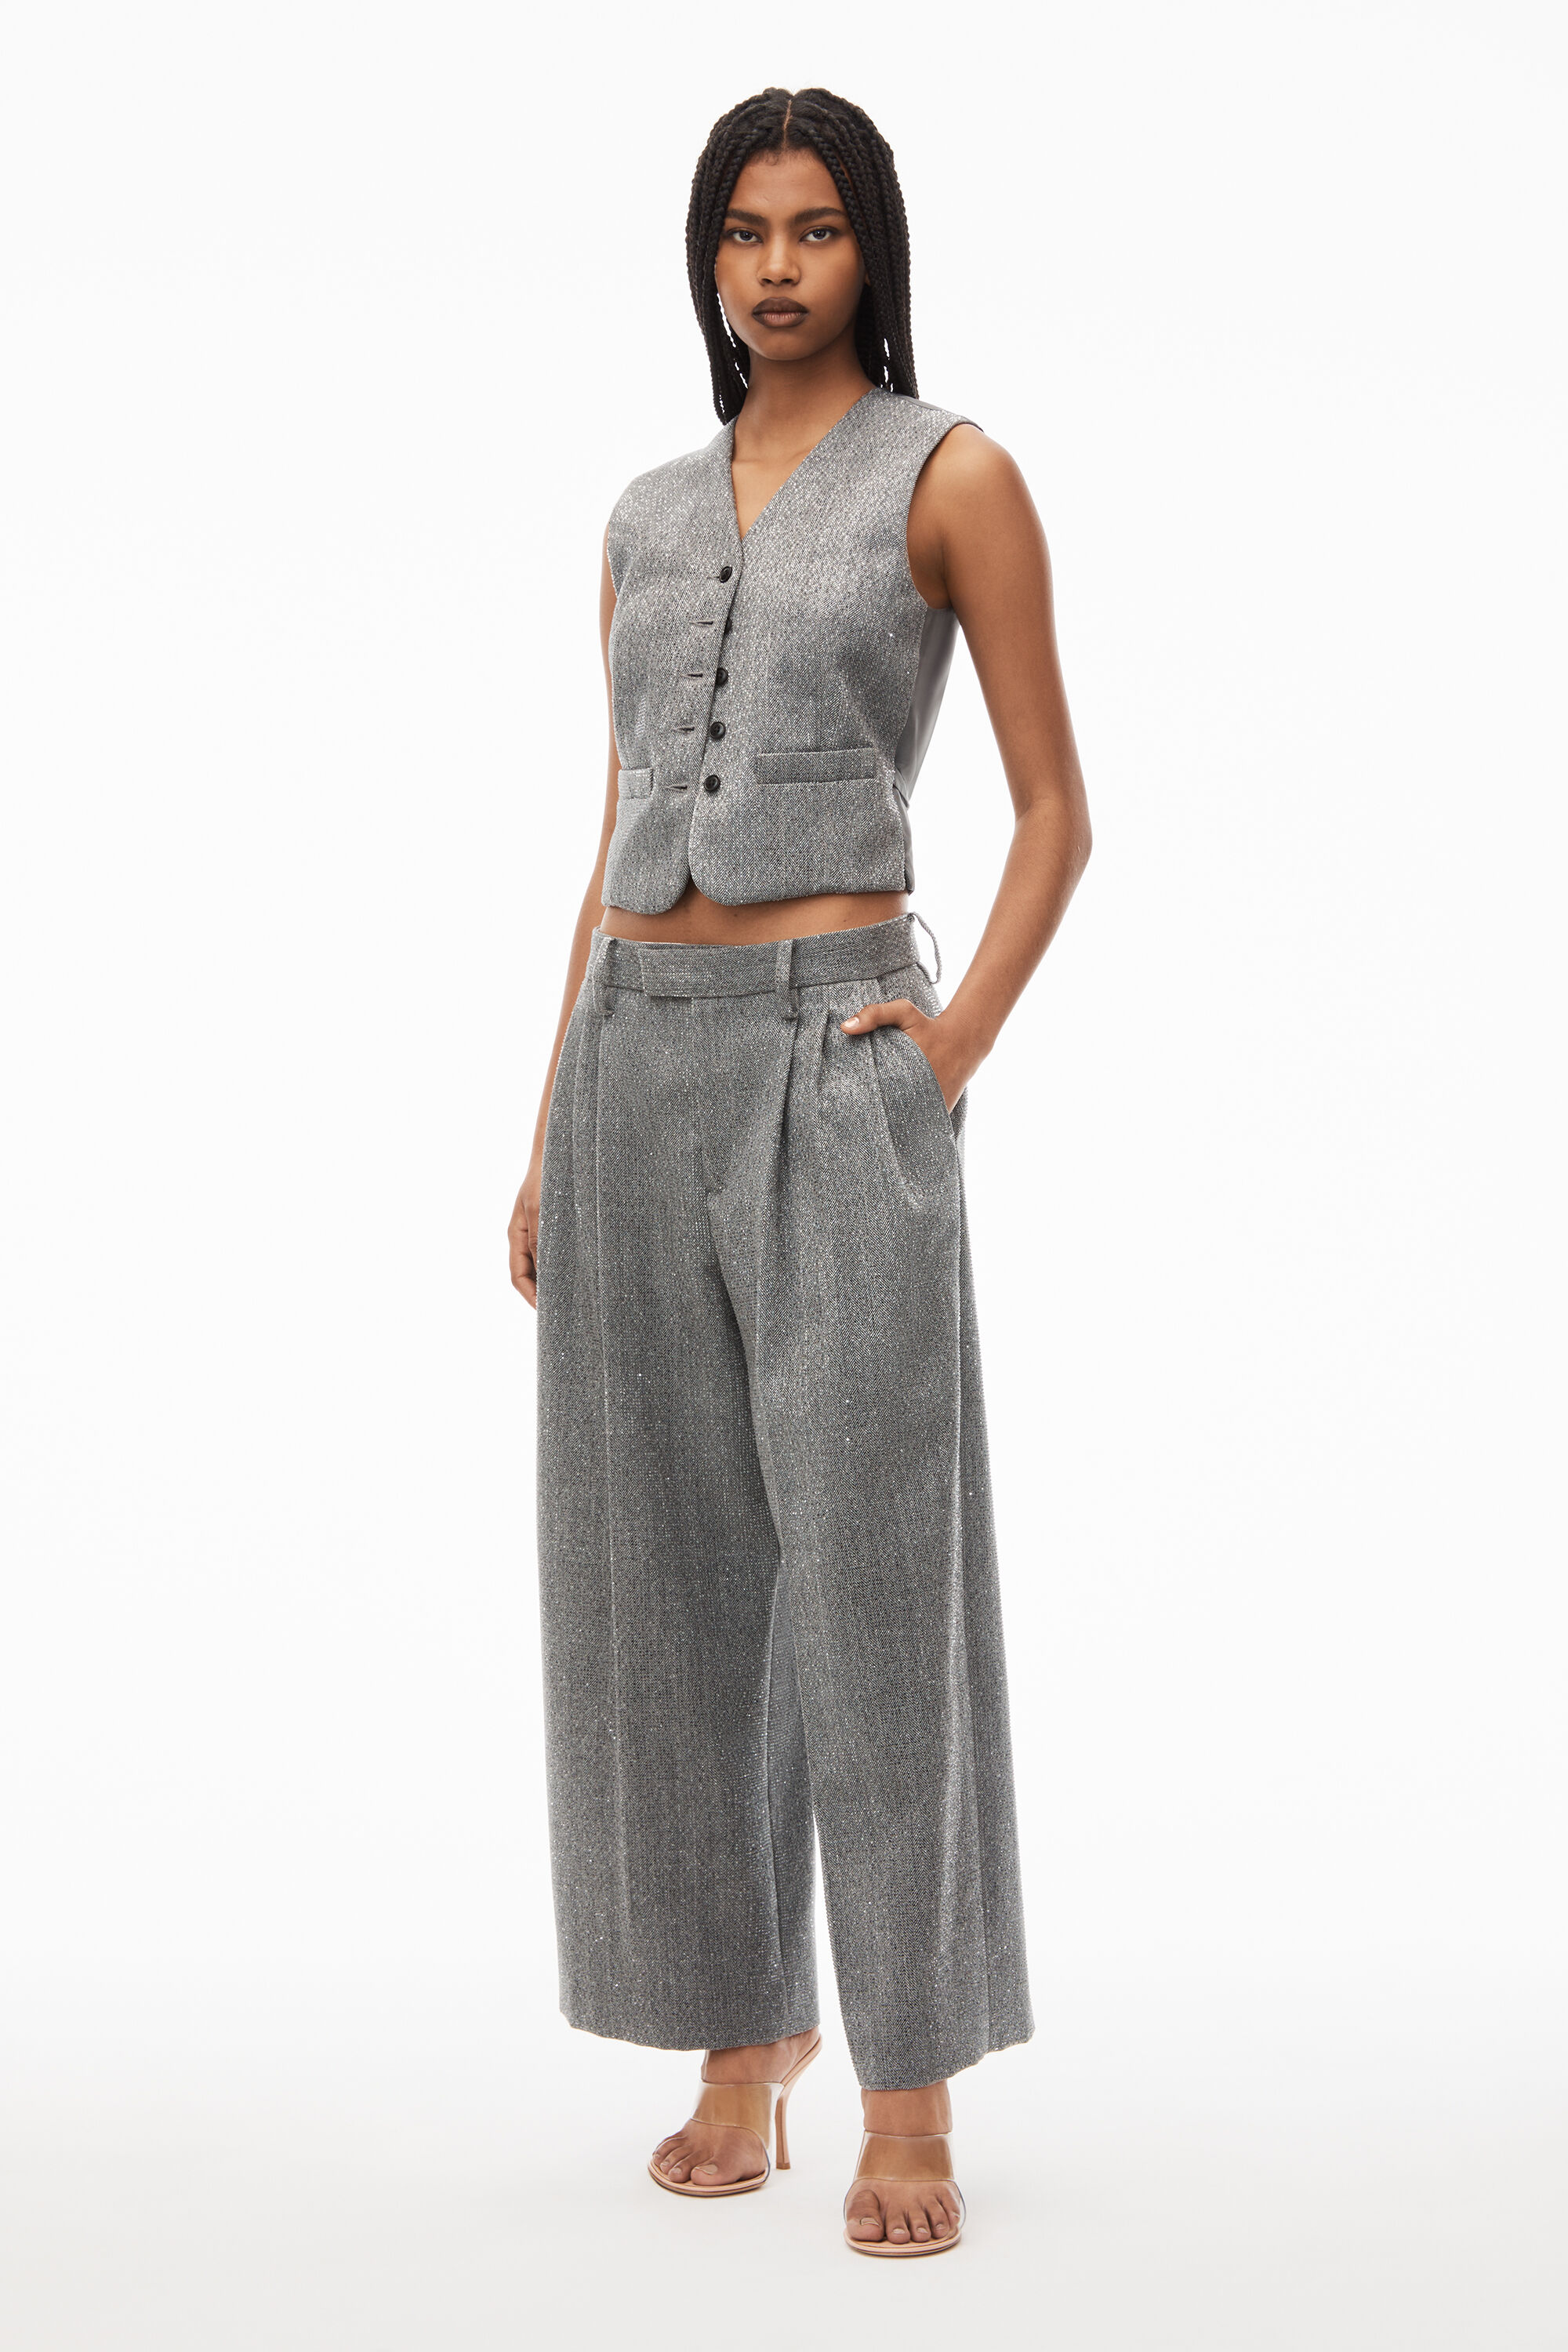 New - Alexander Wang Grey Pants  Street style dress, Grey pants